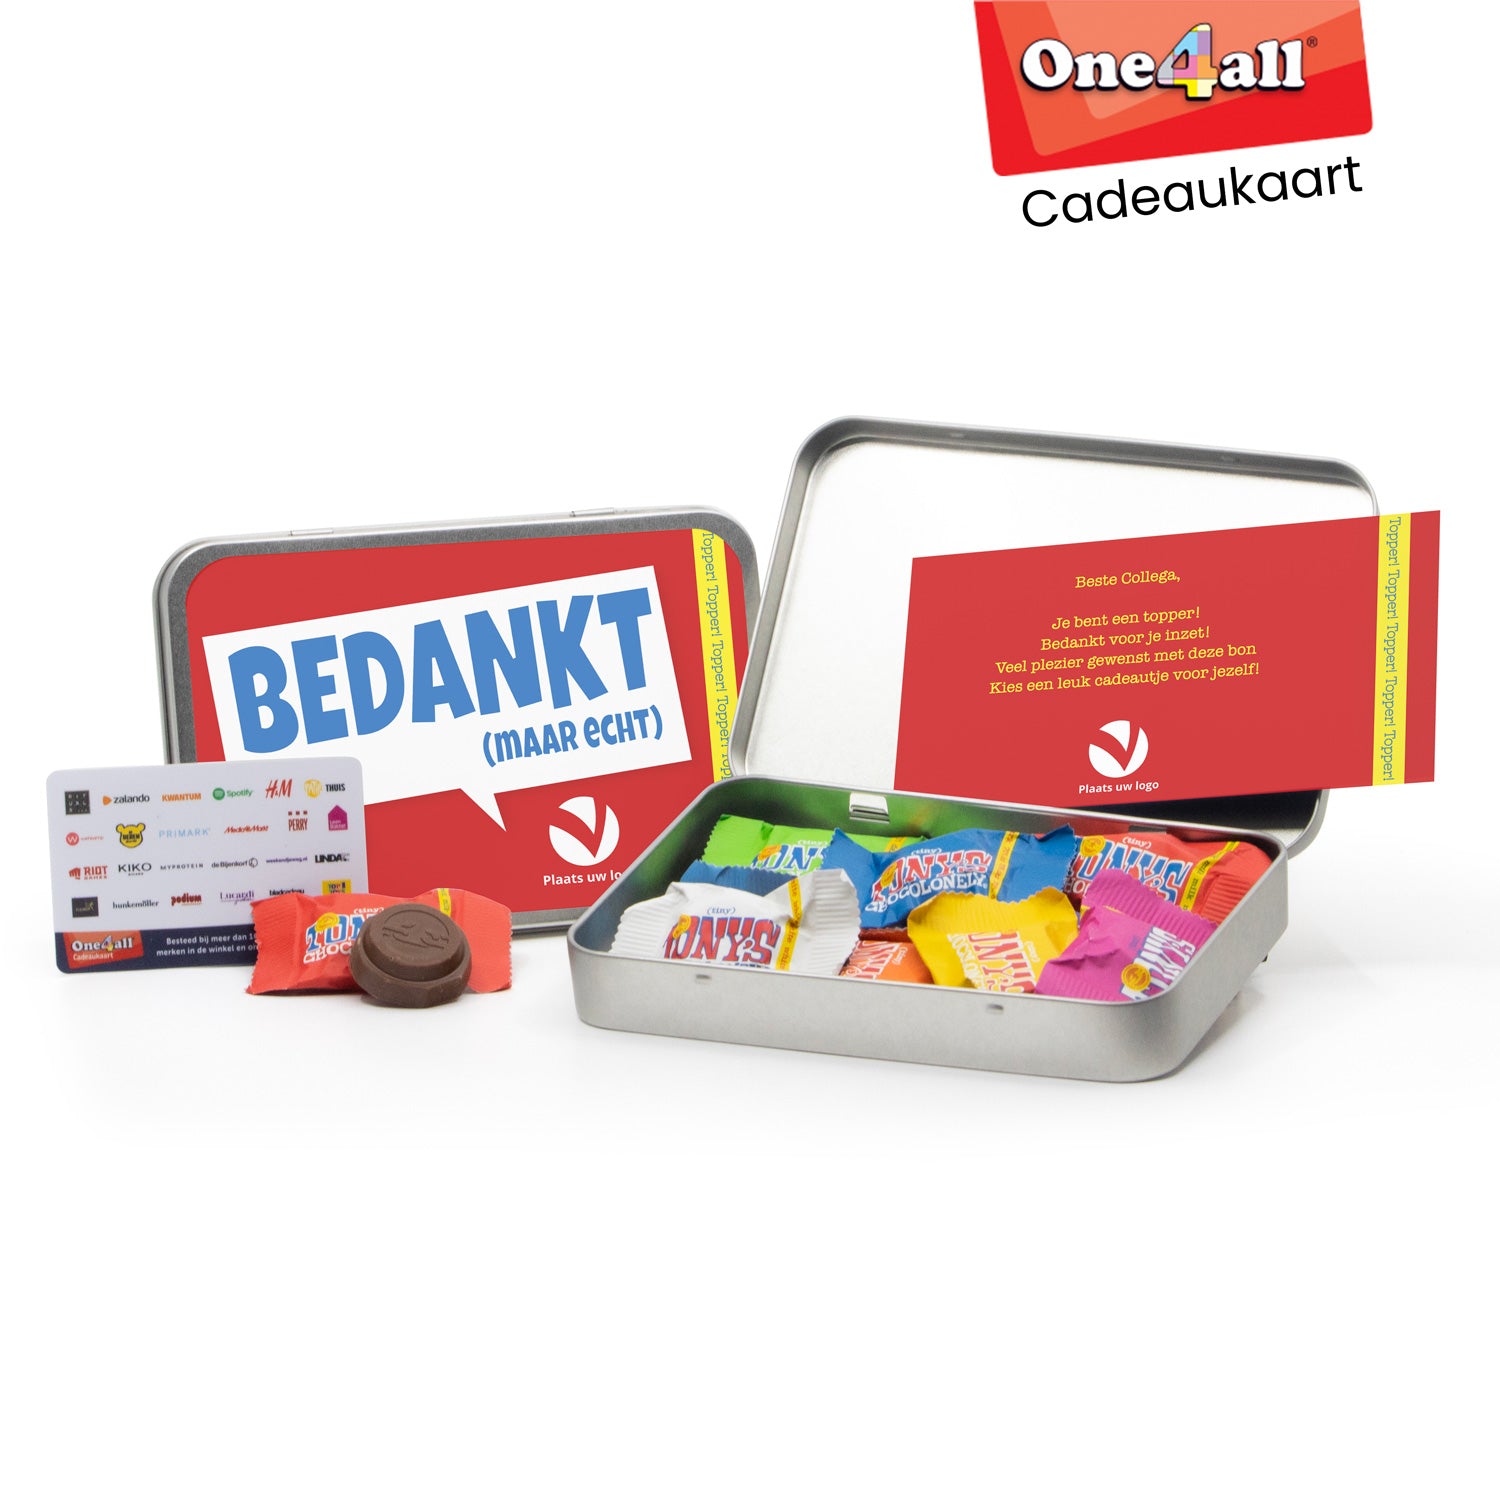 Tiny Tony's in blik met One4All cadeaukaart - Vrijwilliger - Bedankjes.nl